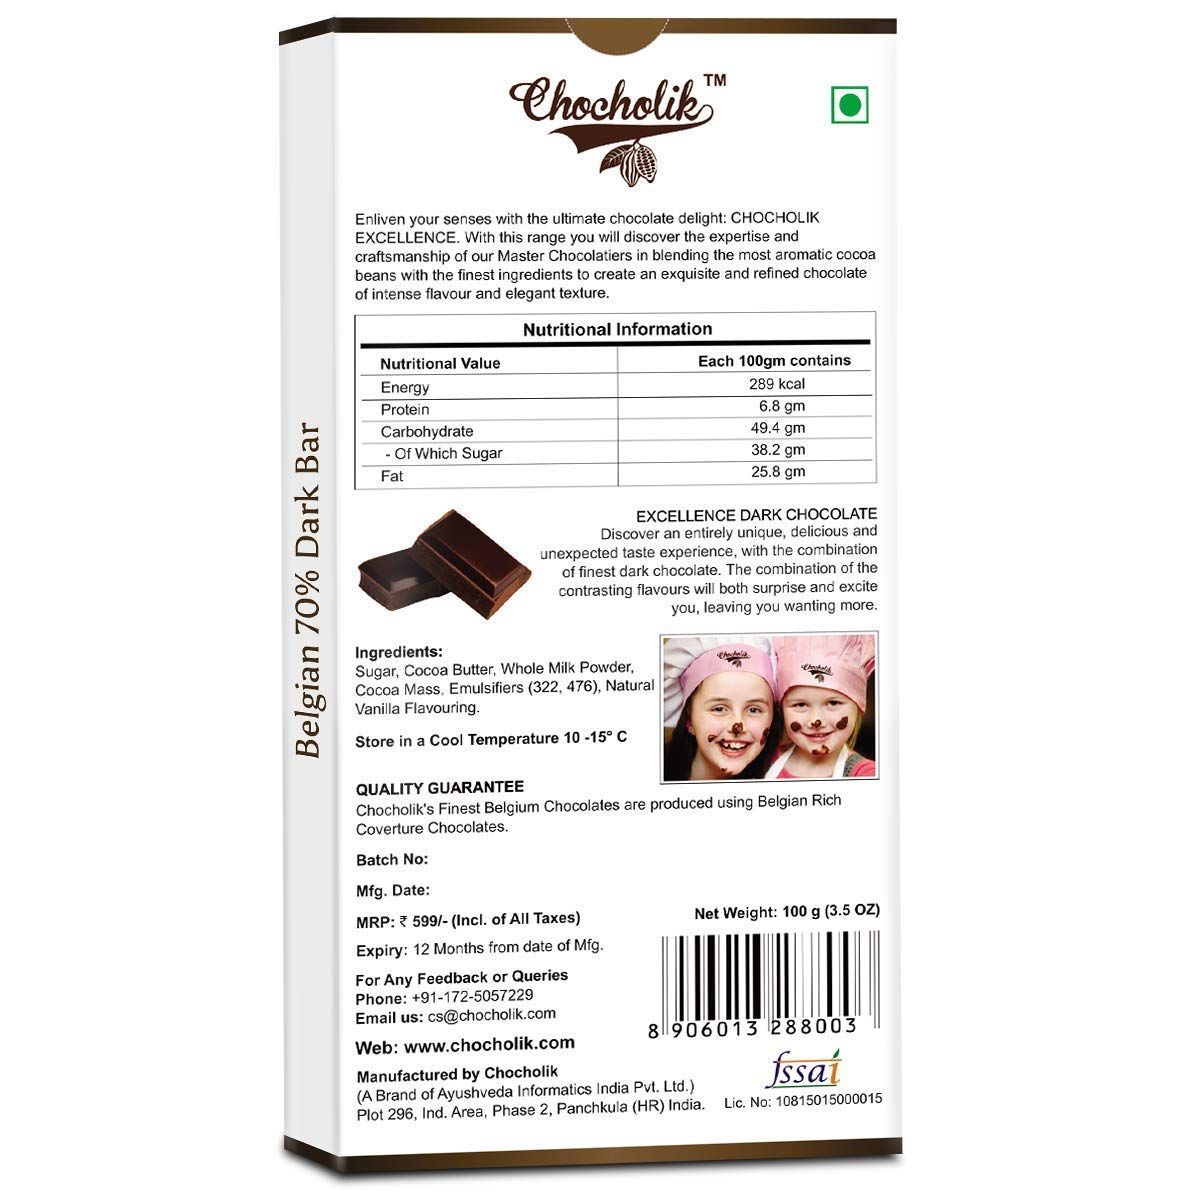 Chocholik Valentine Day Chocolate Gift Box Image